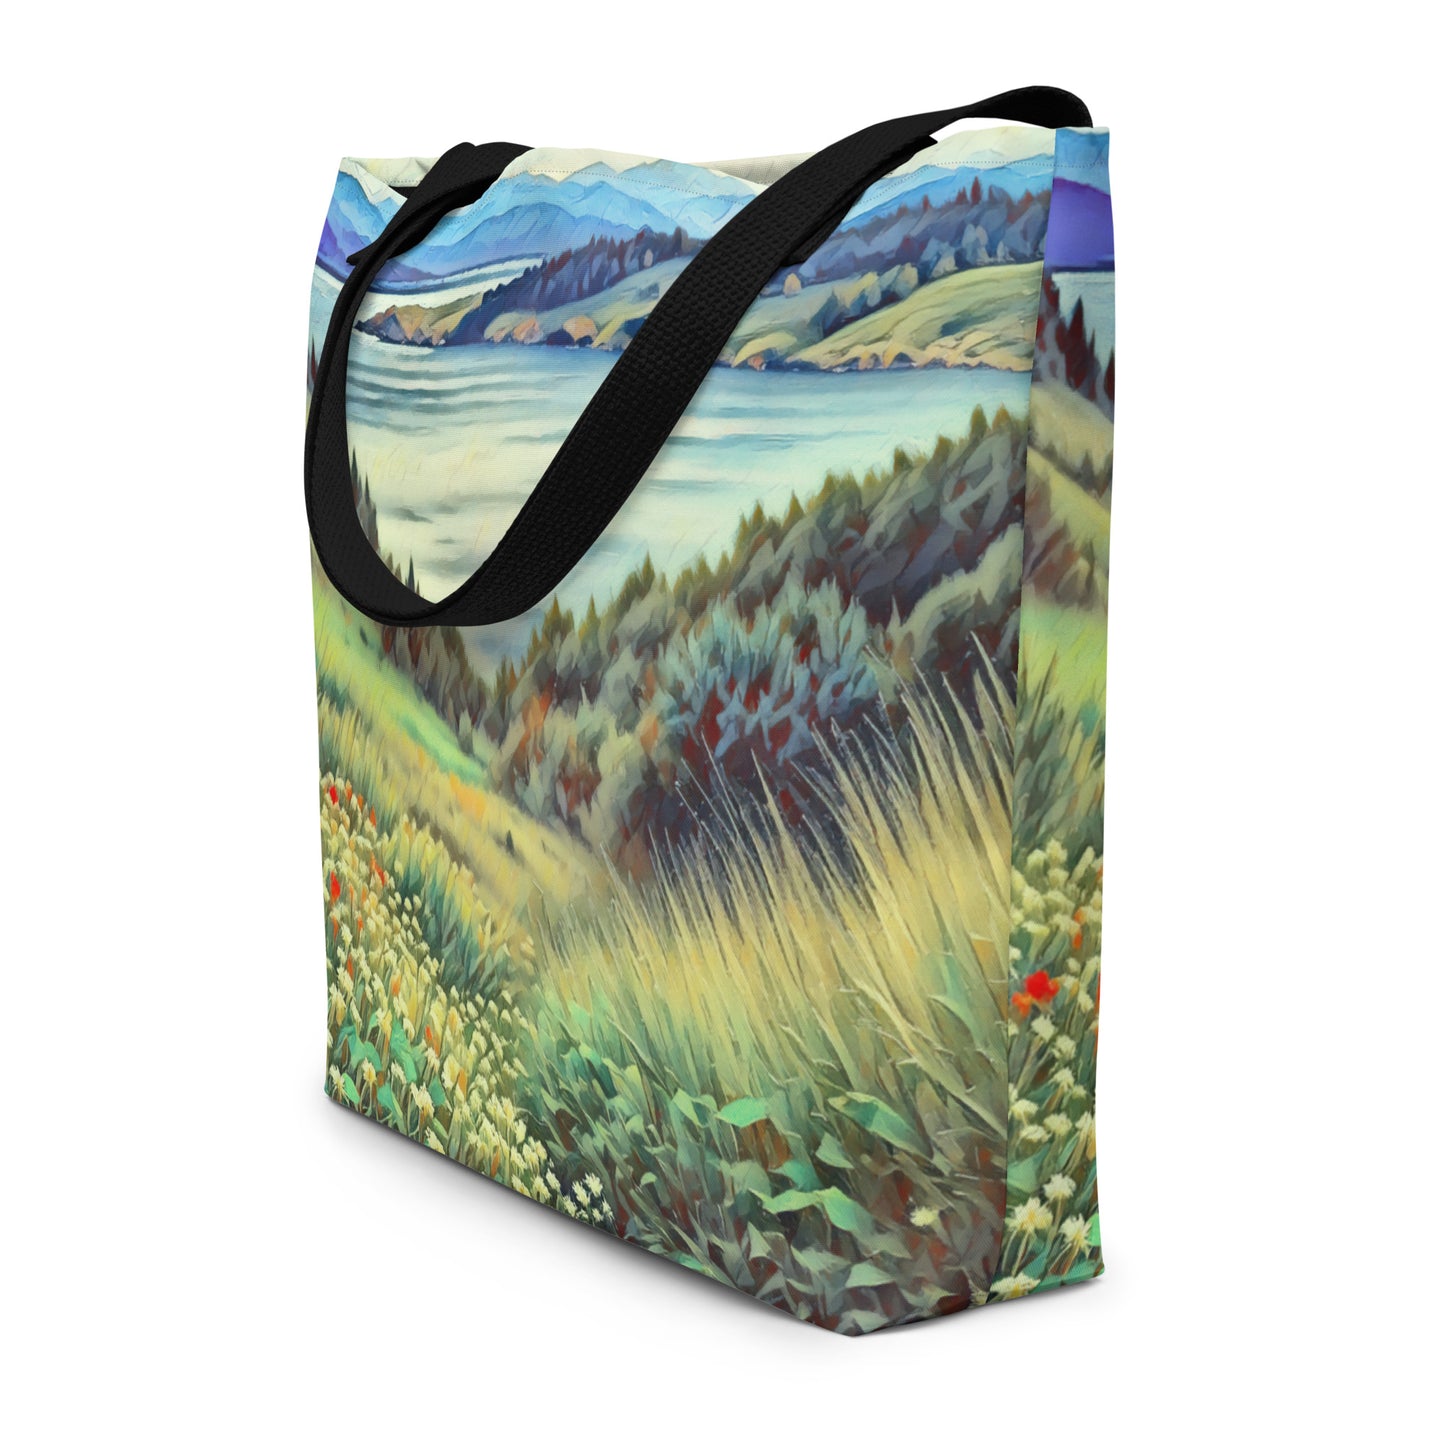 Columbia River - Digital Art - Large 16x20 Tote Bag W/Pocket